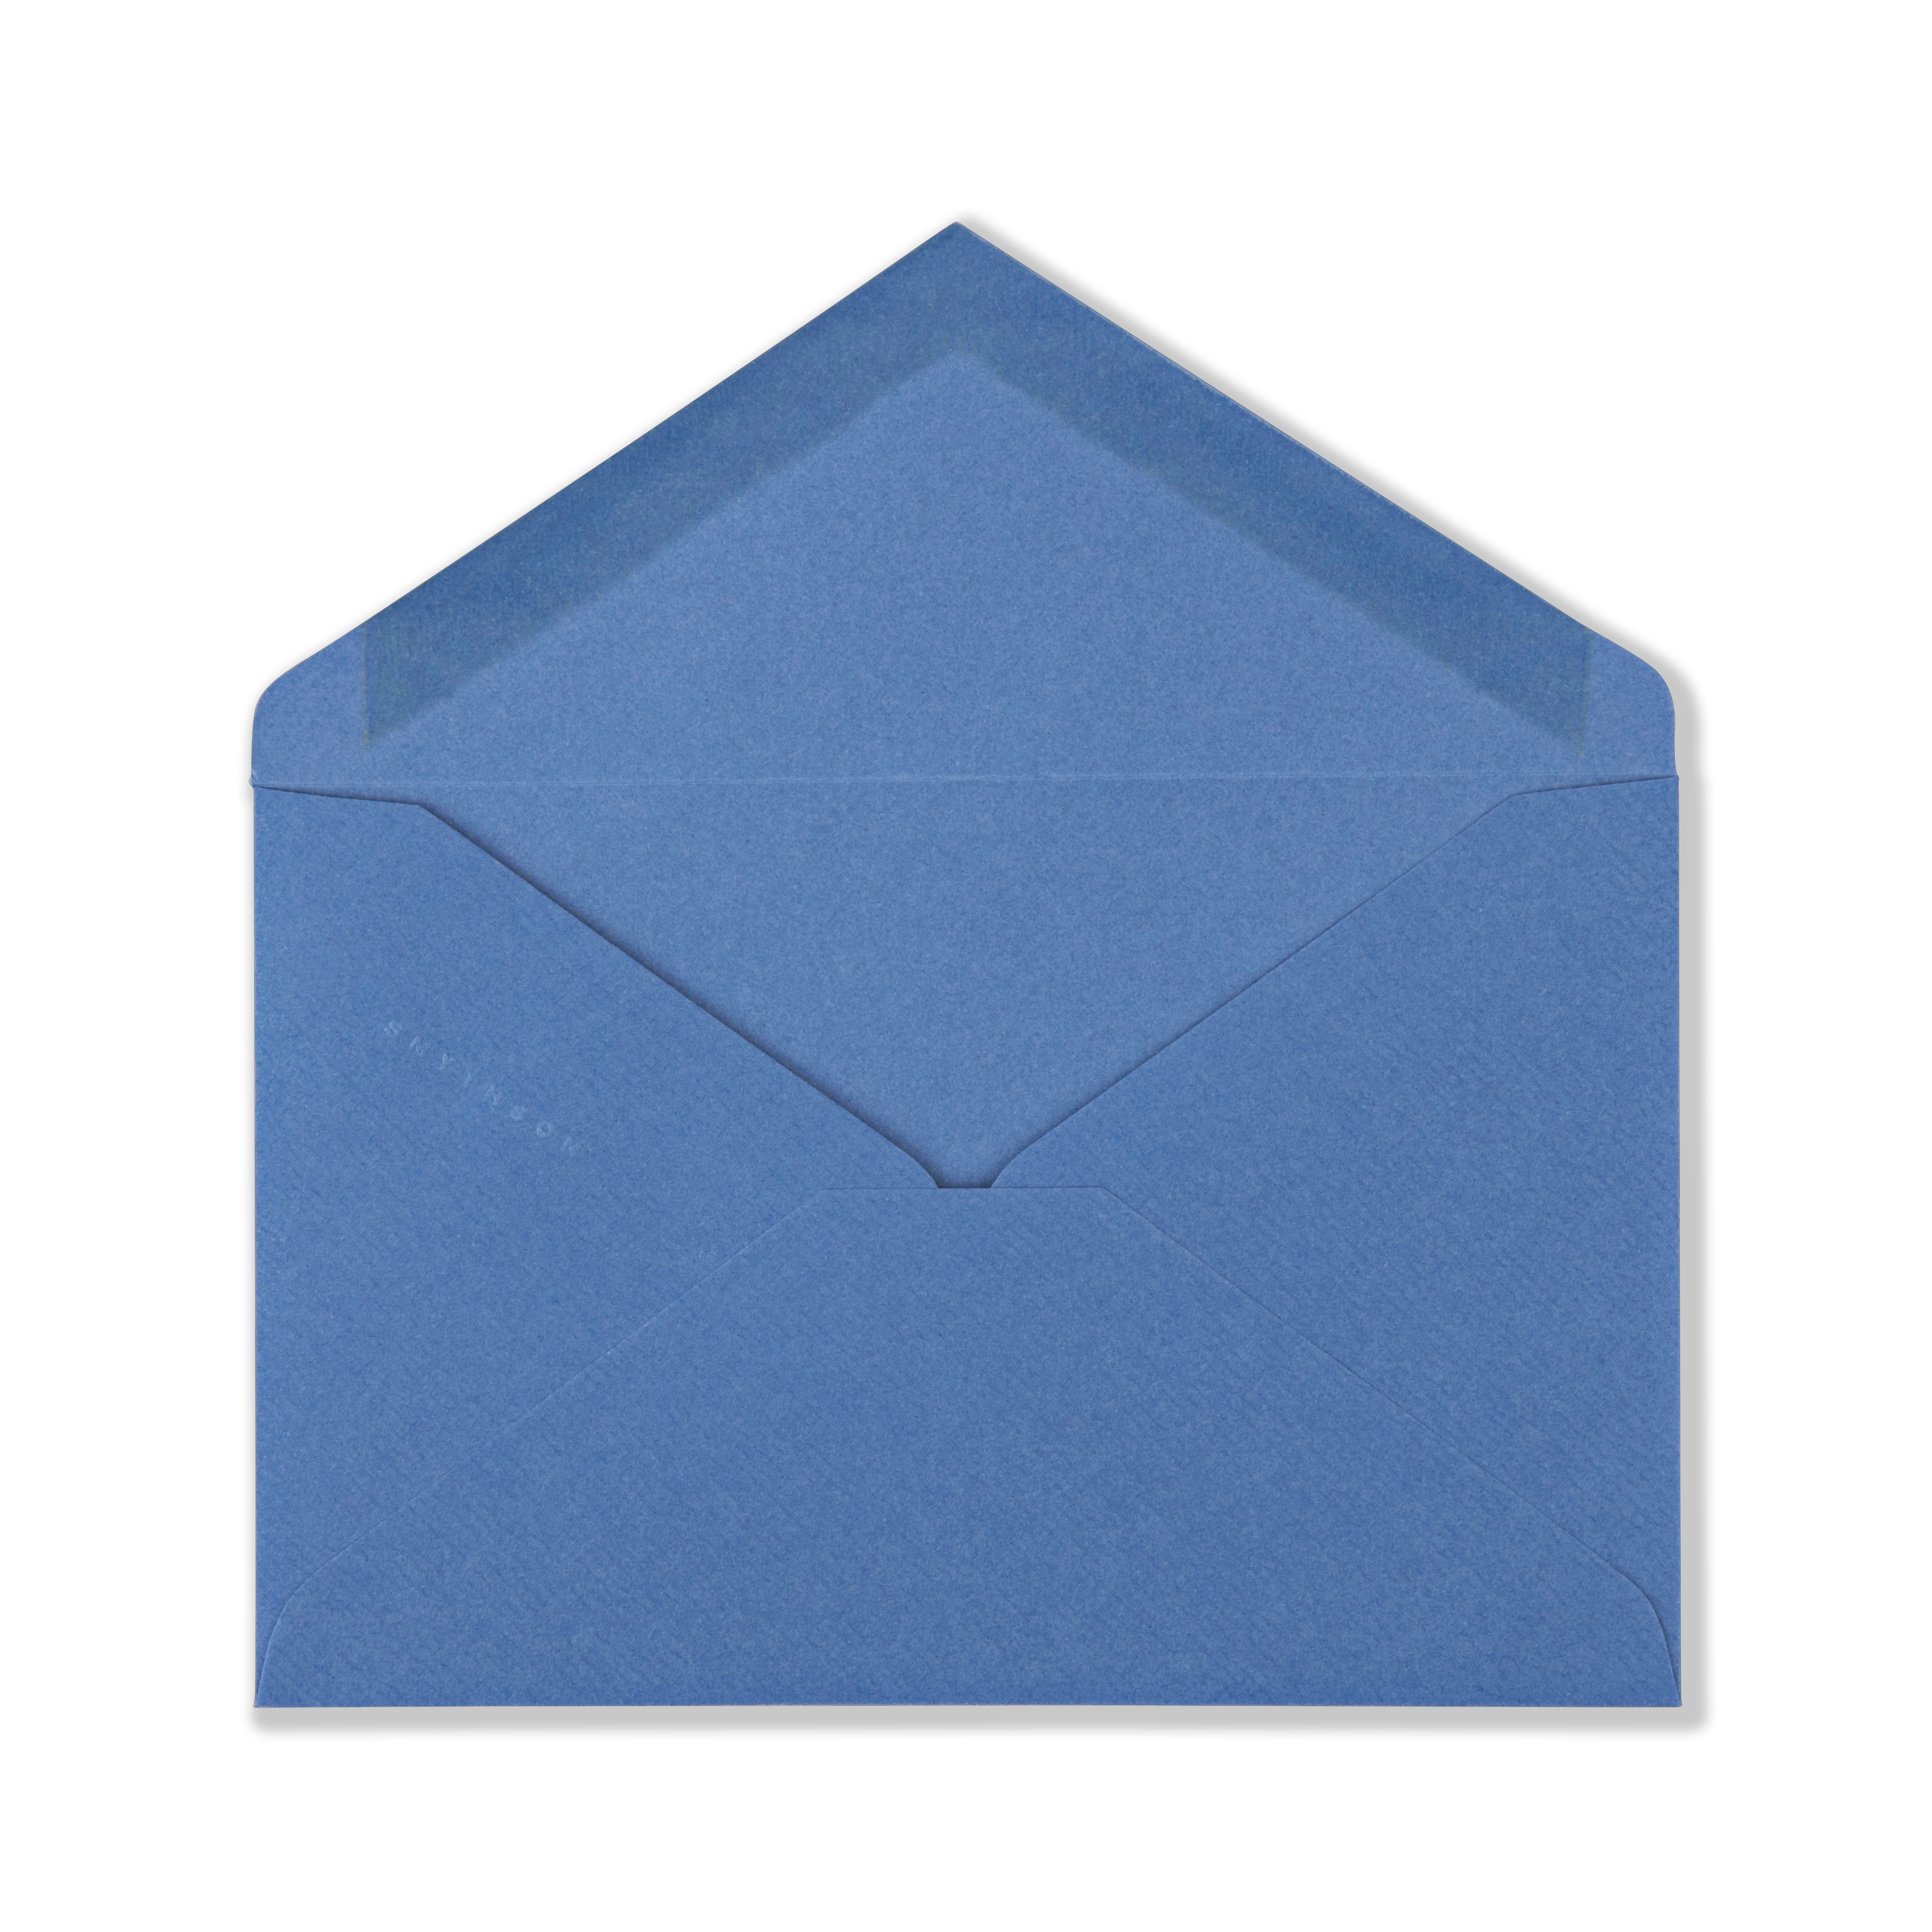 Smythson King Envelopes  nile blue